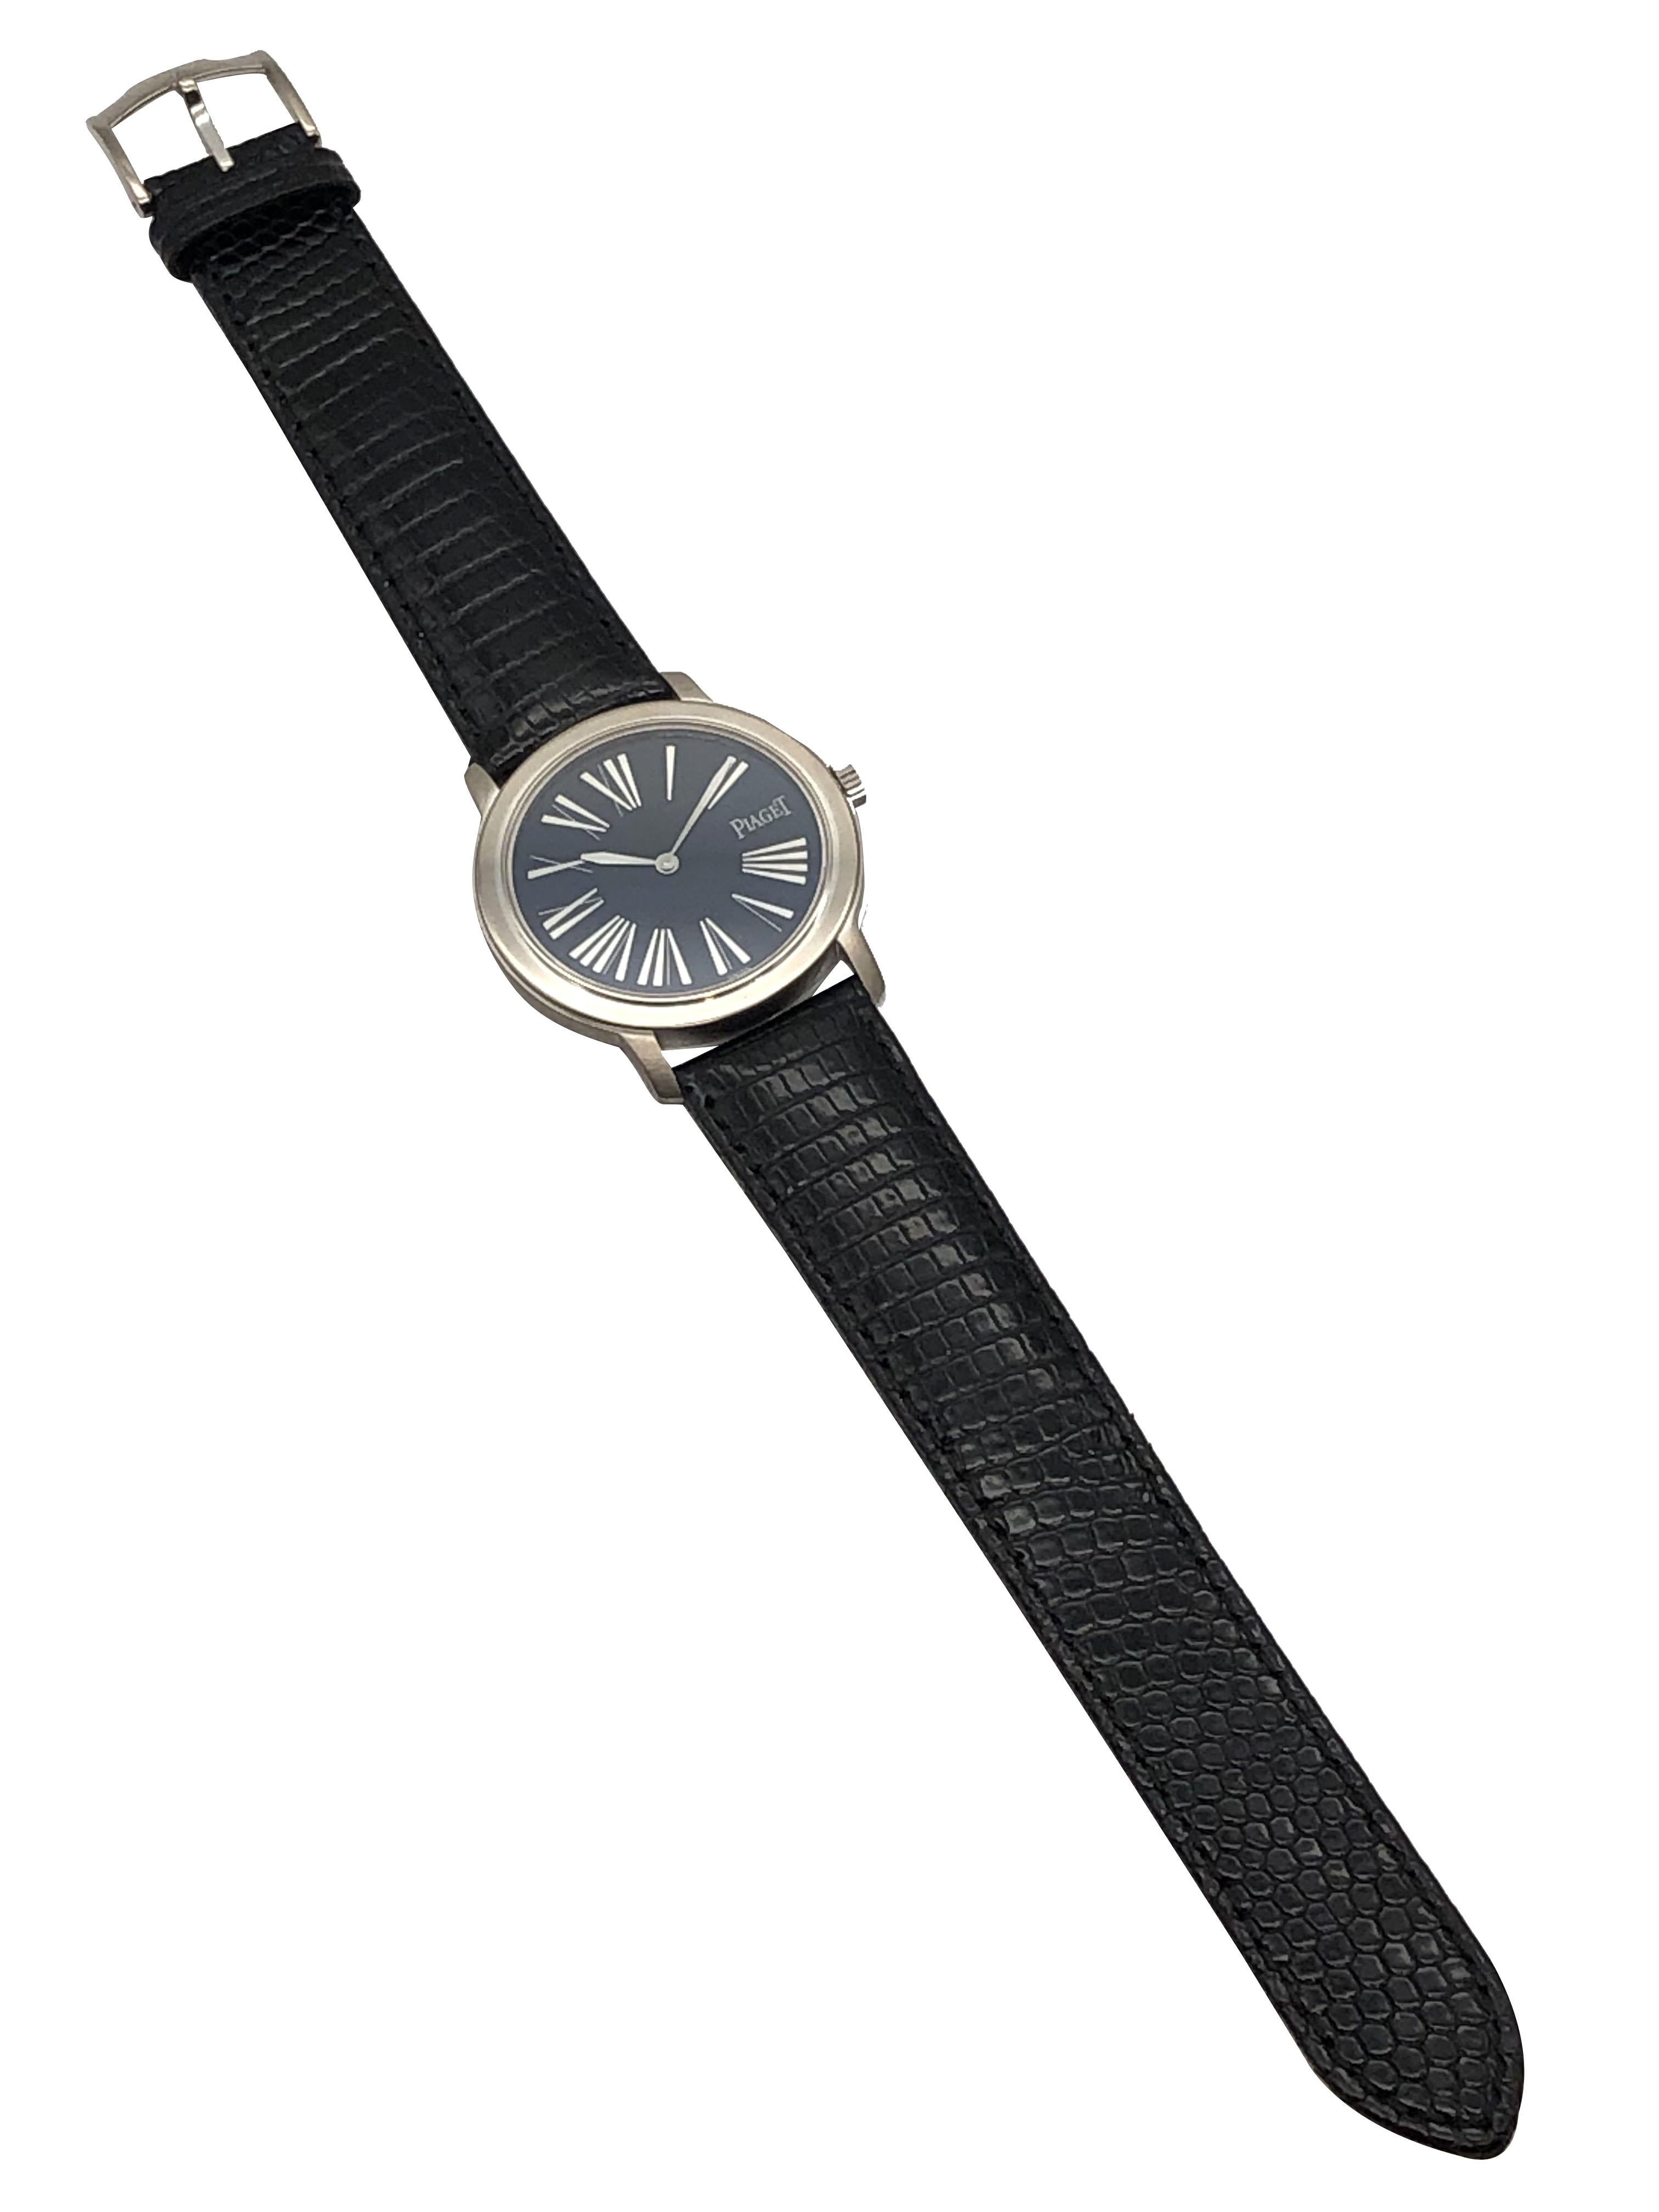 Piaget Altiplano White Gold Mechanical Wrist Watch 1